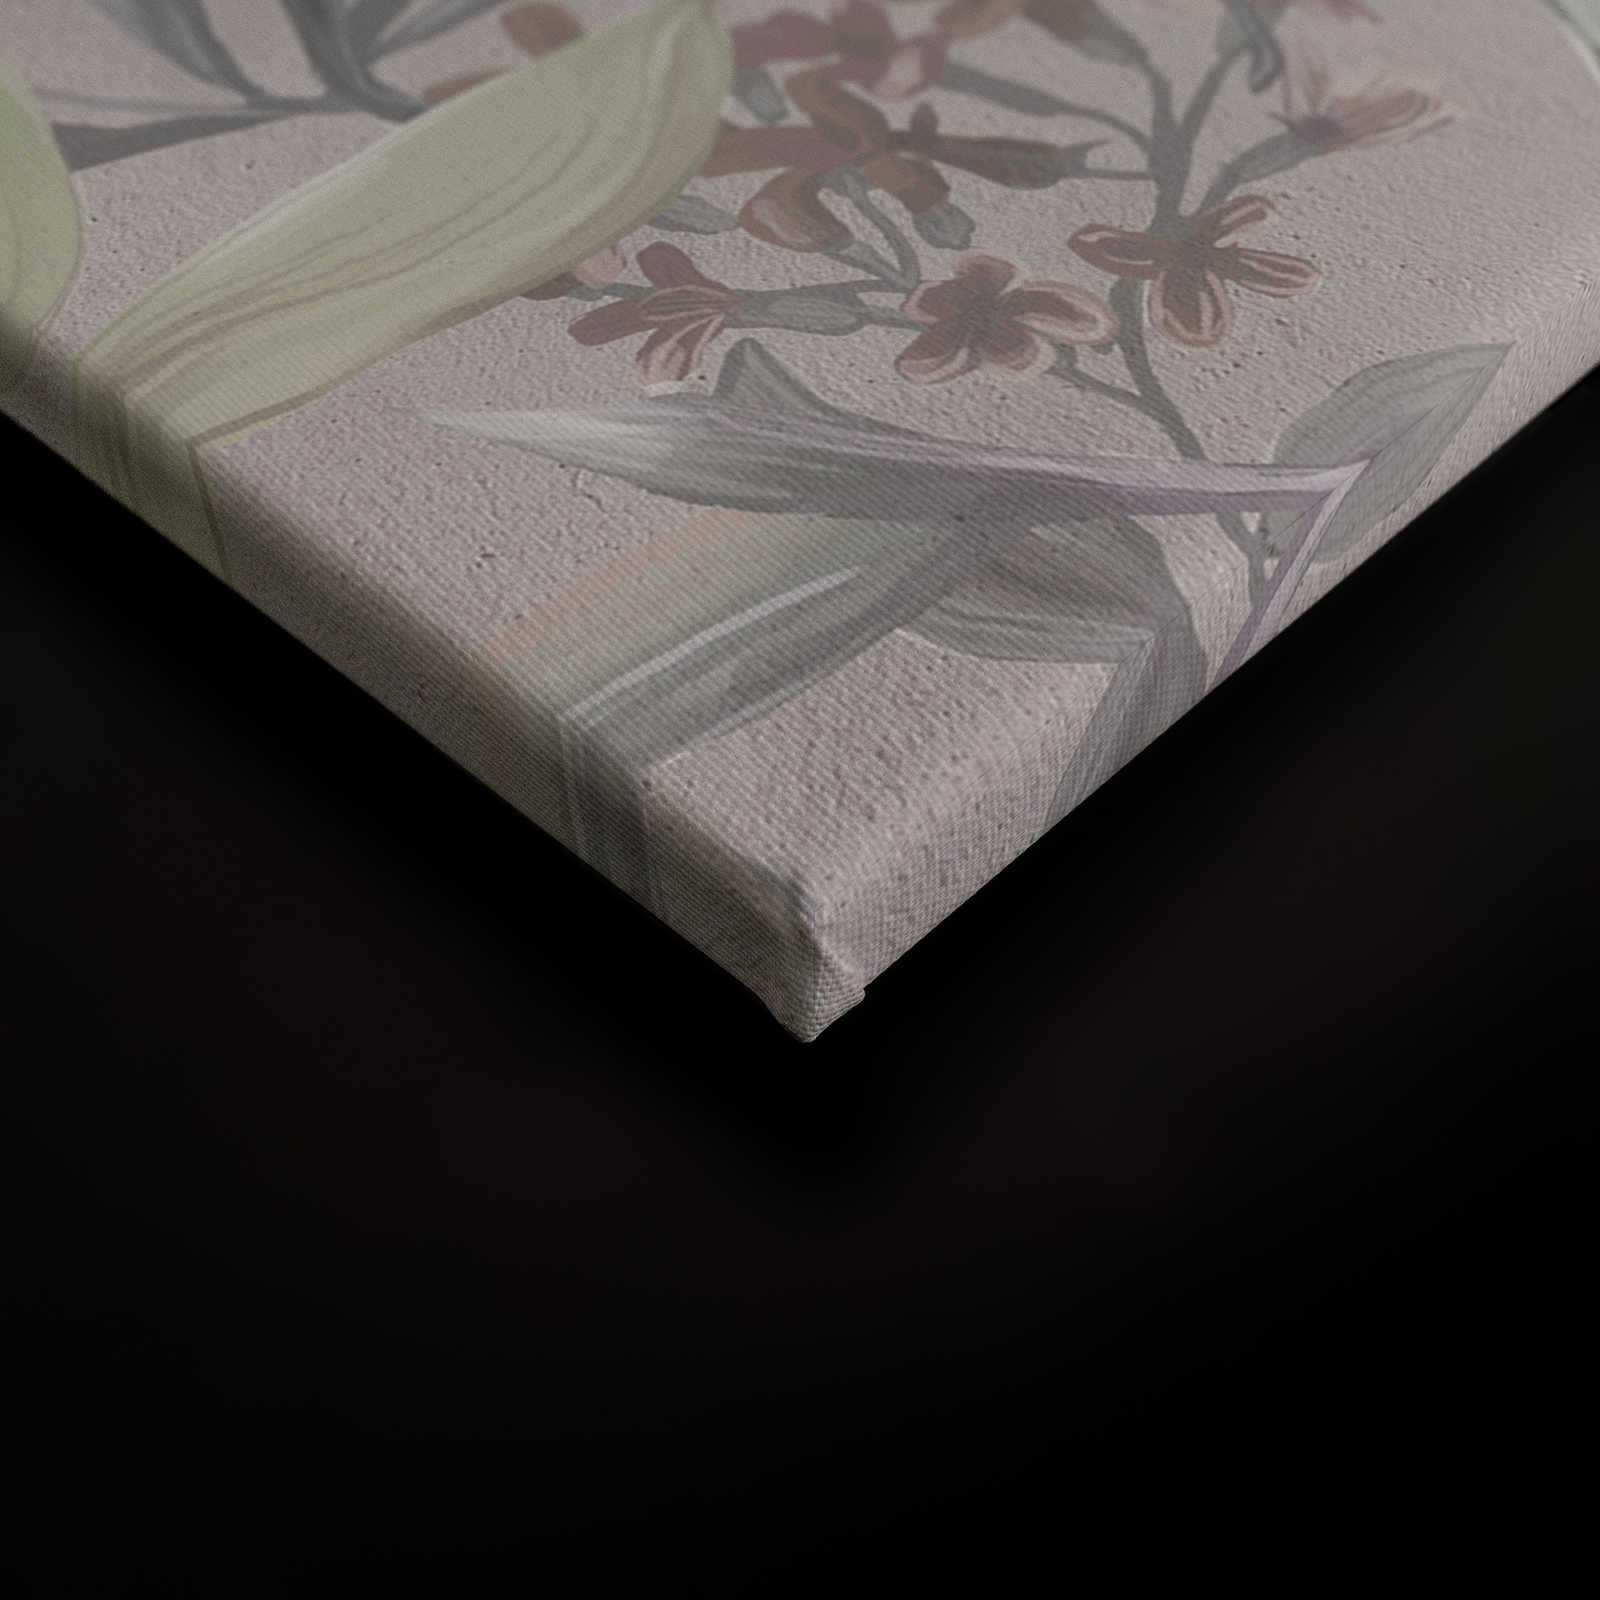             Pittura su tela Jungle floreale disegnata | grigio, bianco - 0,90 m x 0,60 m
        